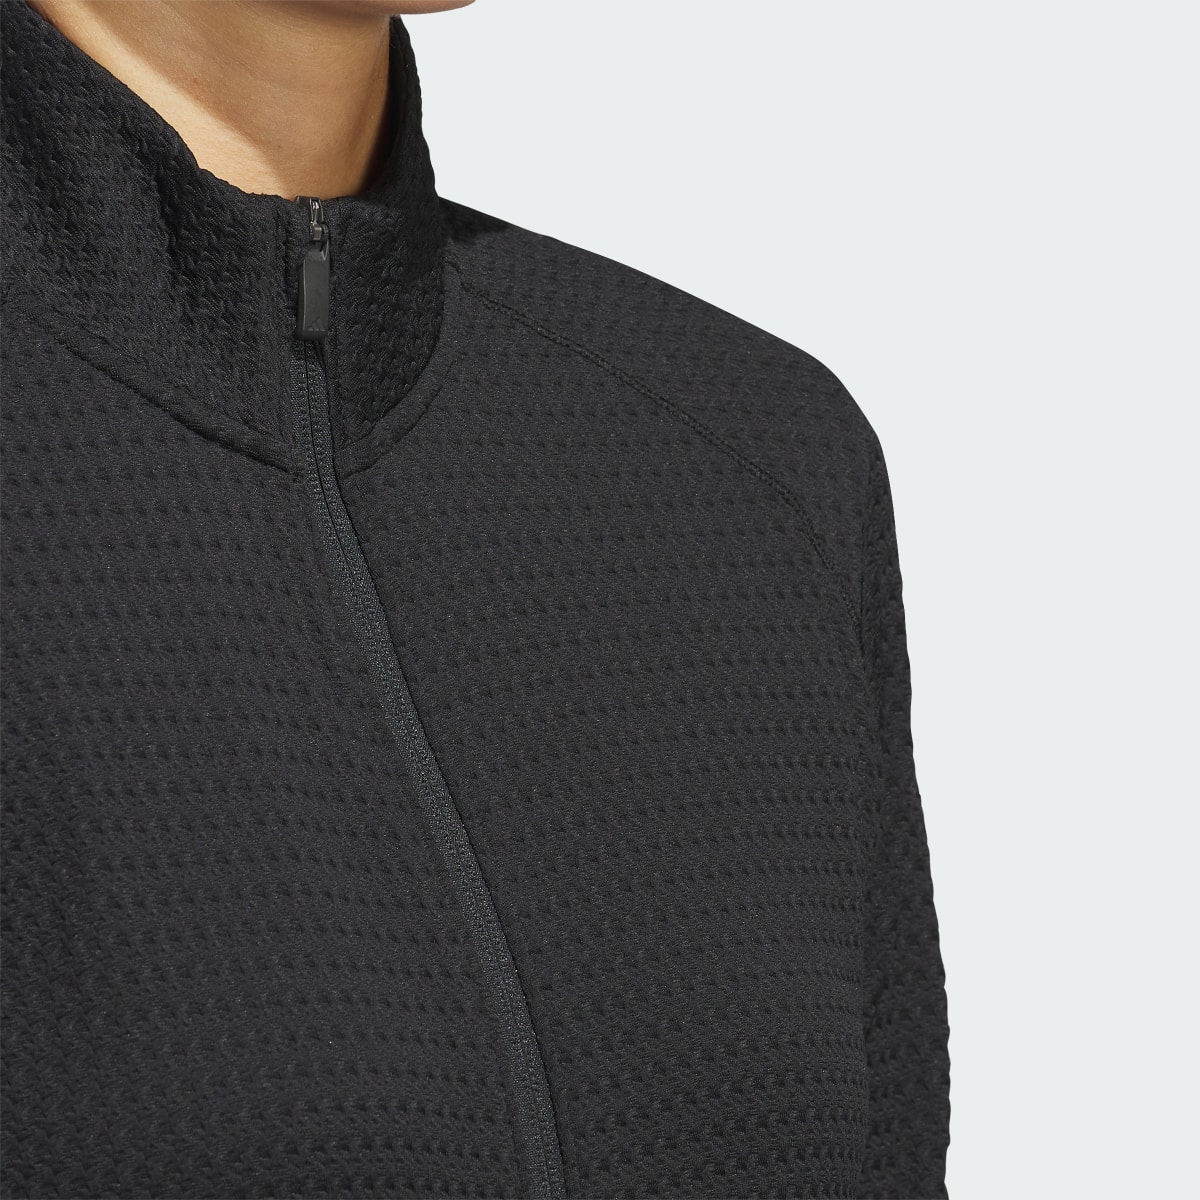 Adidas Women's Ultimate365 Textured Jacket. 6